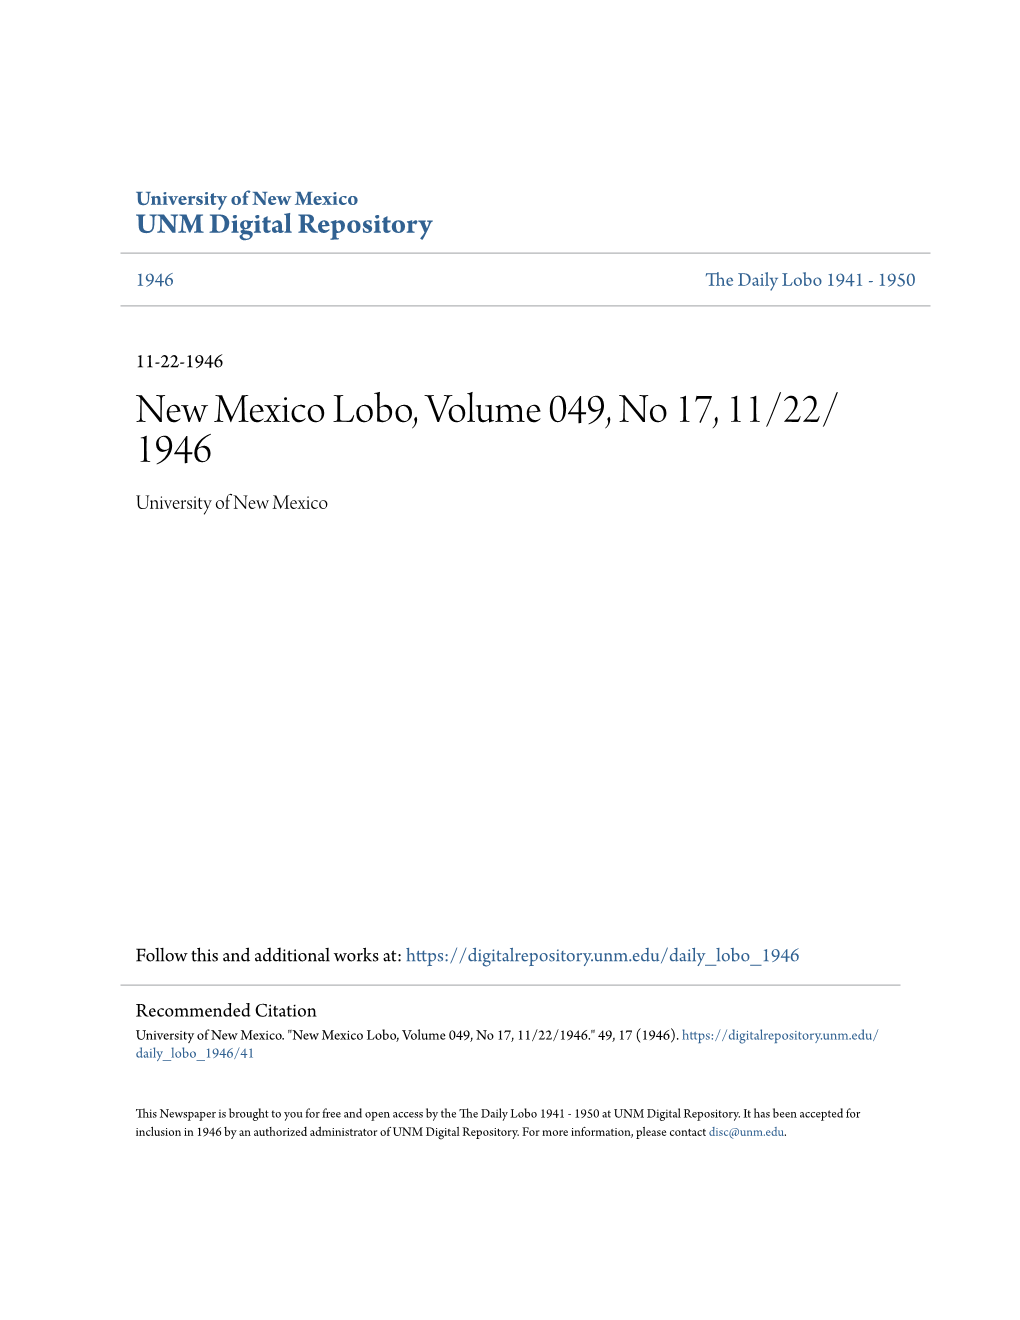 New Mexico Lobo, Volume 049, No 17, 11/22/1946." 49, 17 (1946)